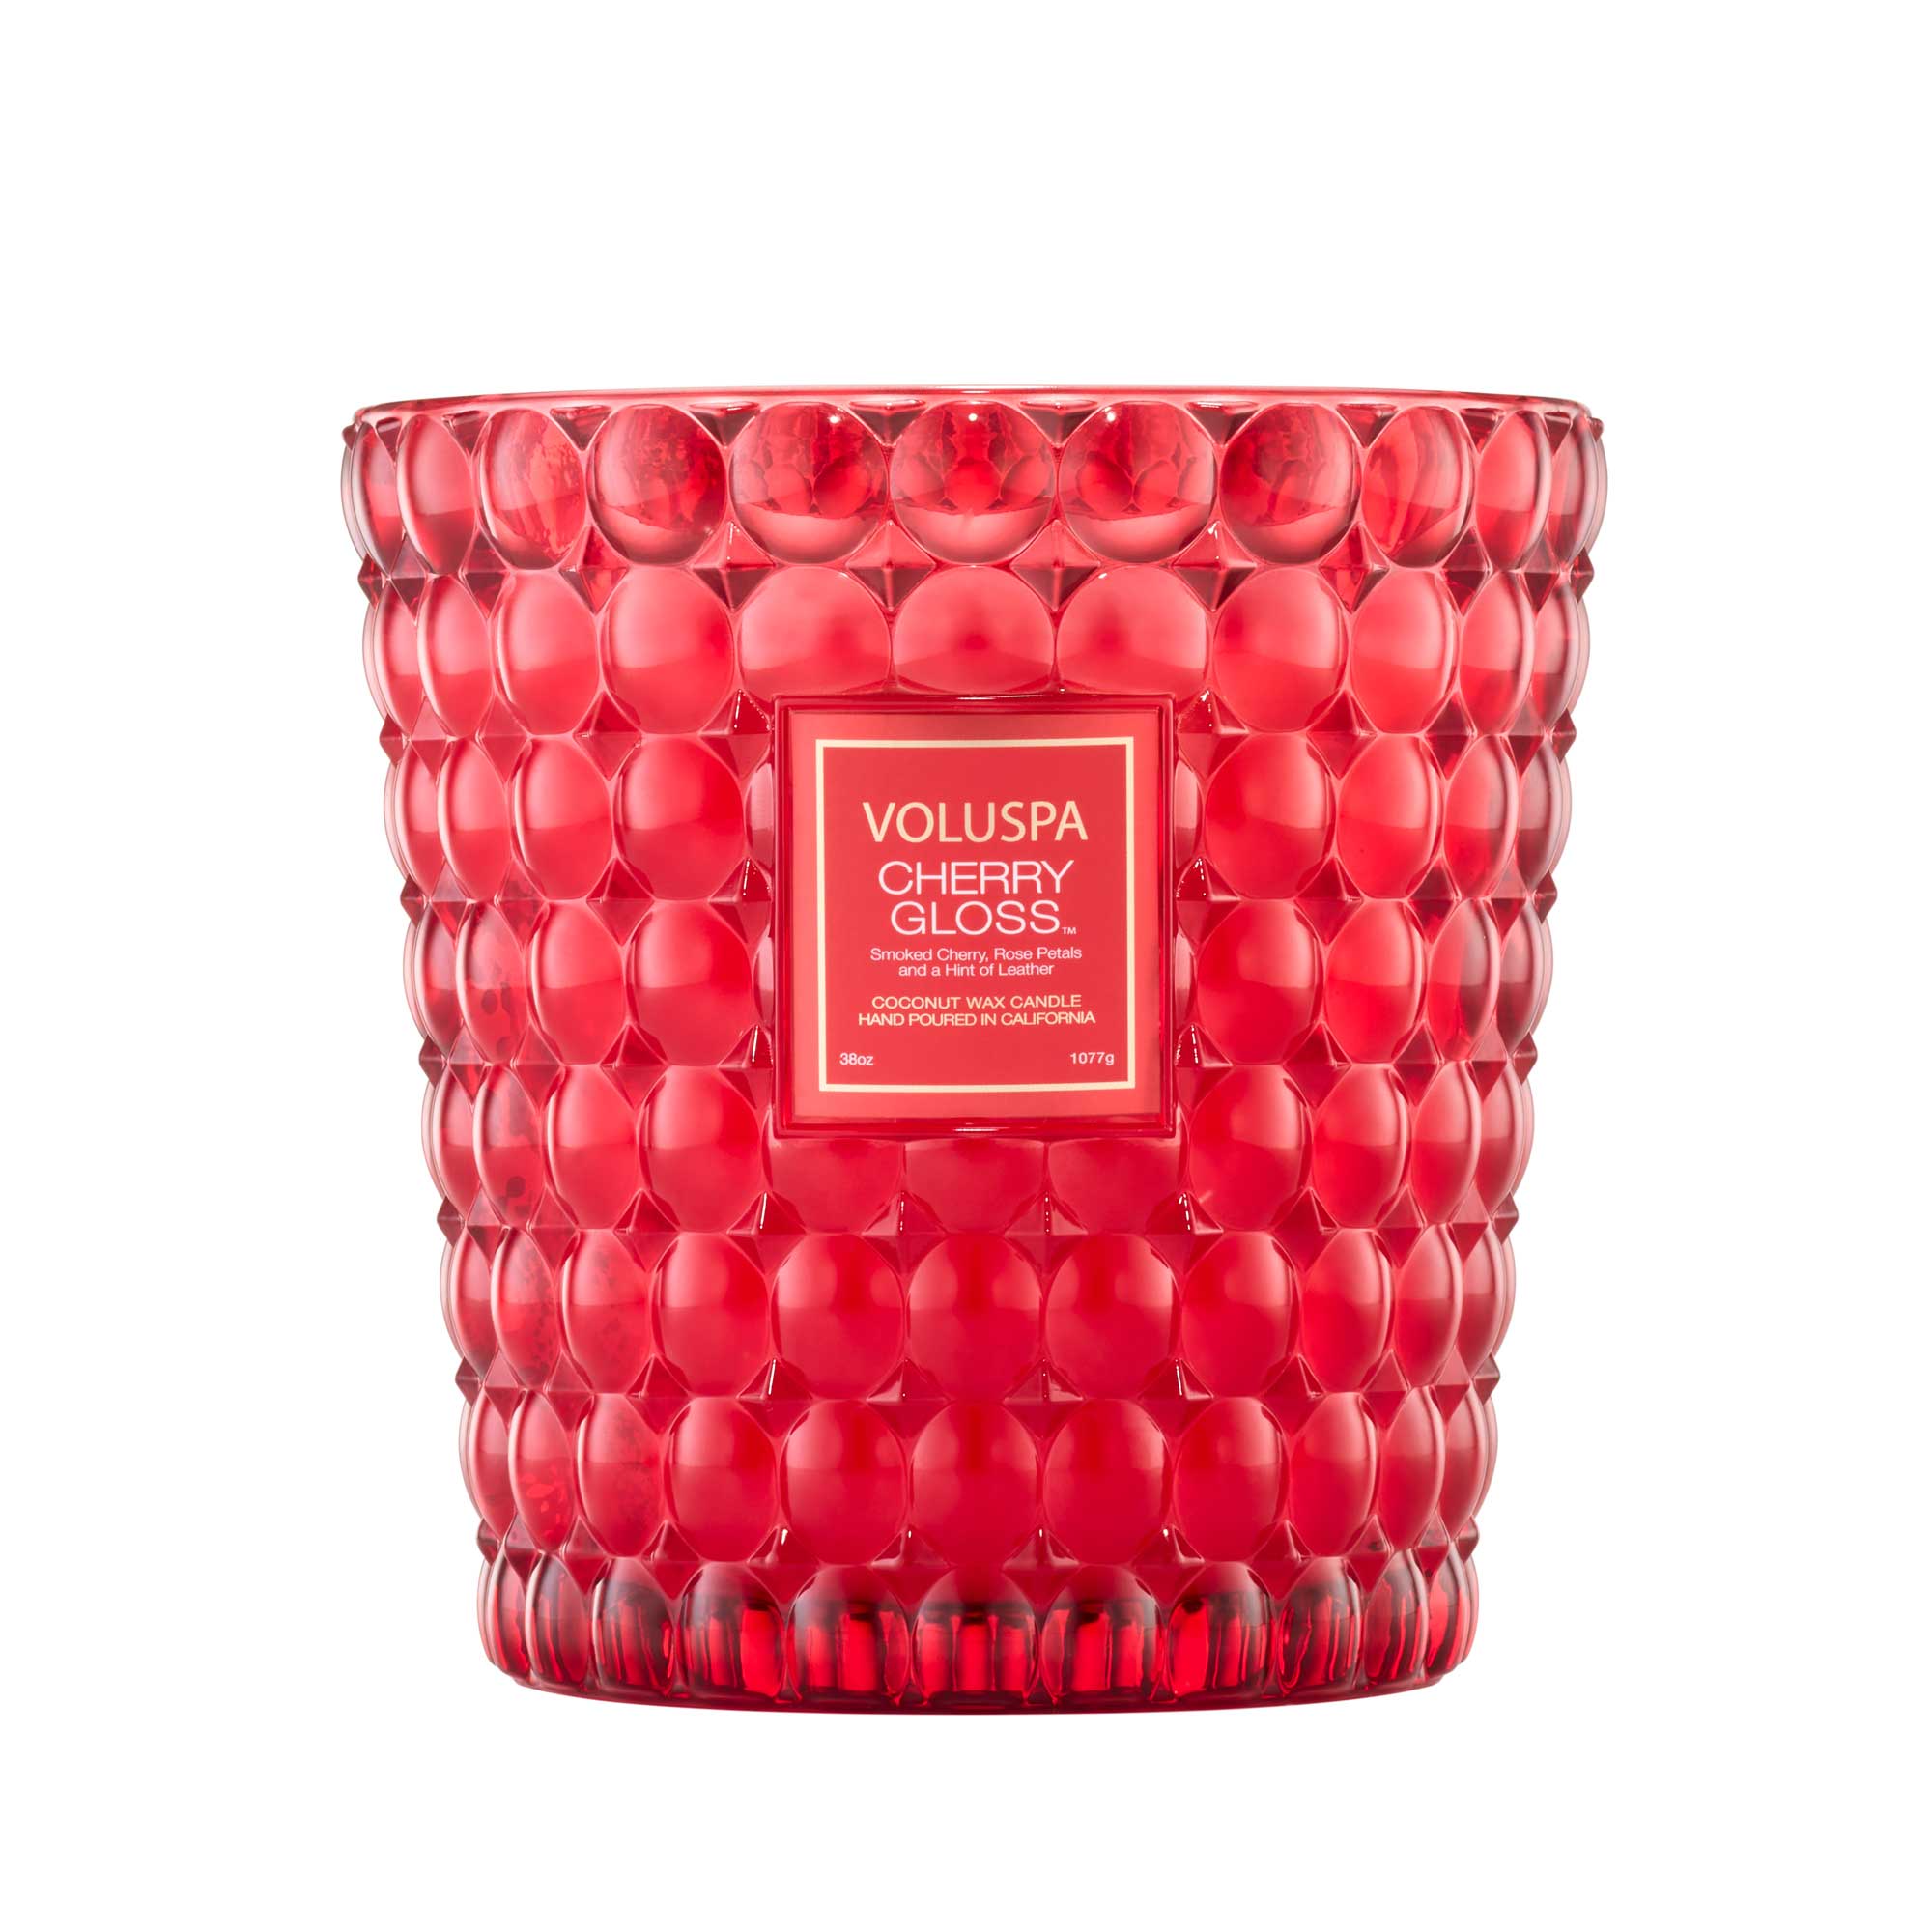 Voluspa Limited Editon Capsule Collection 3 Wick Hearth 38oz Candle - Cherry Gloss / Cherry Gloss